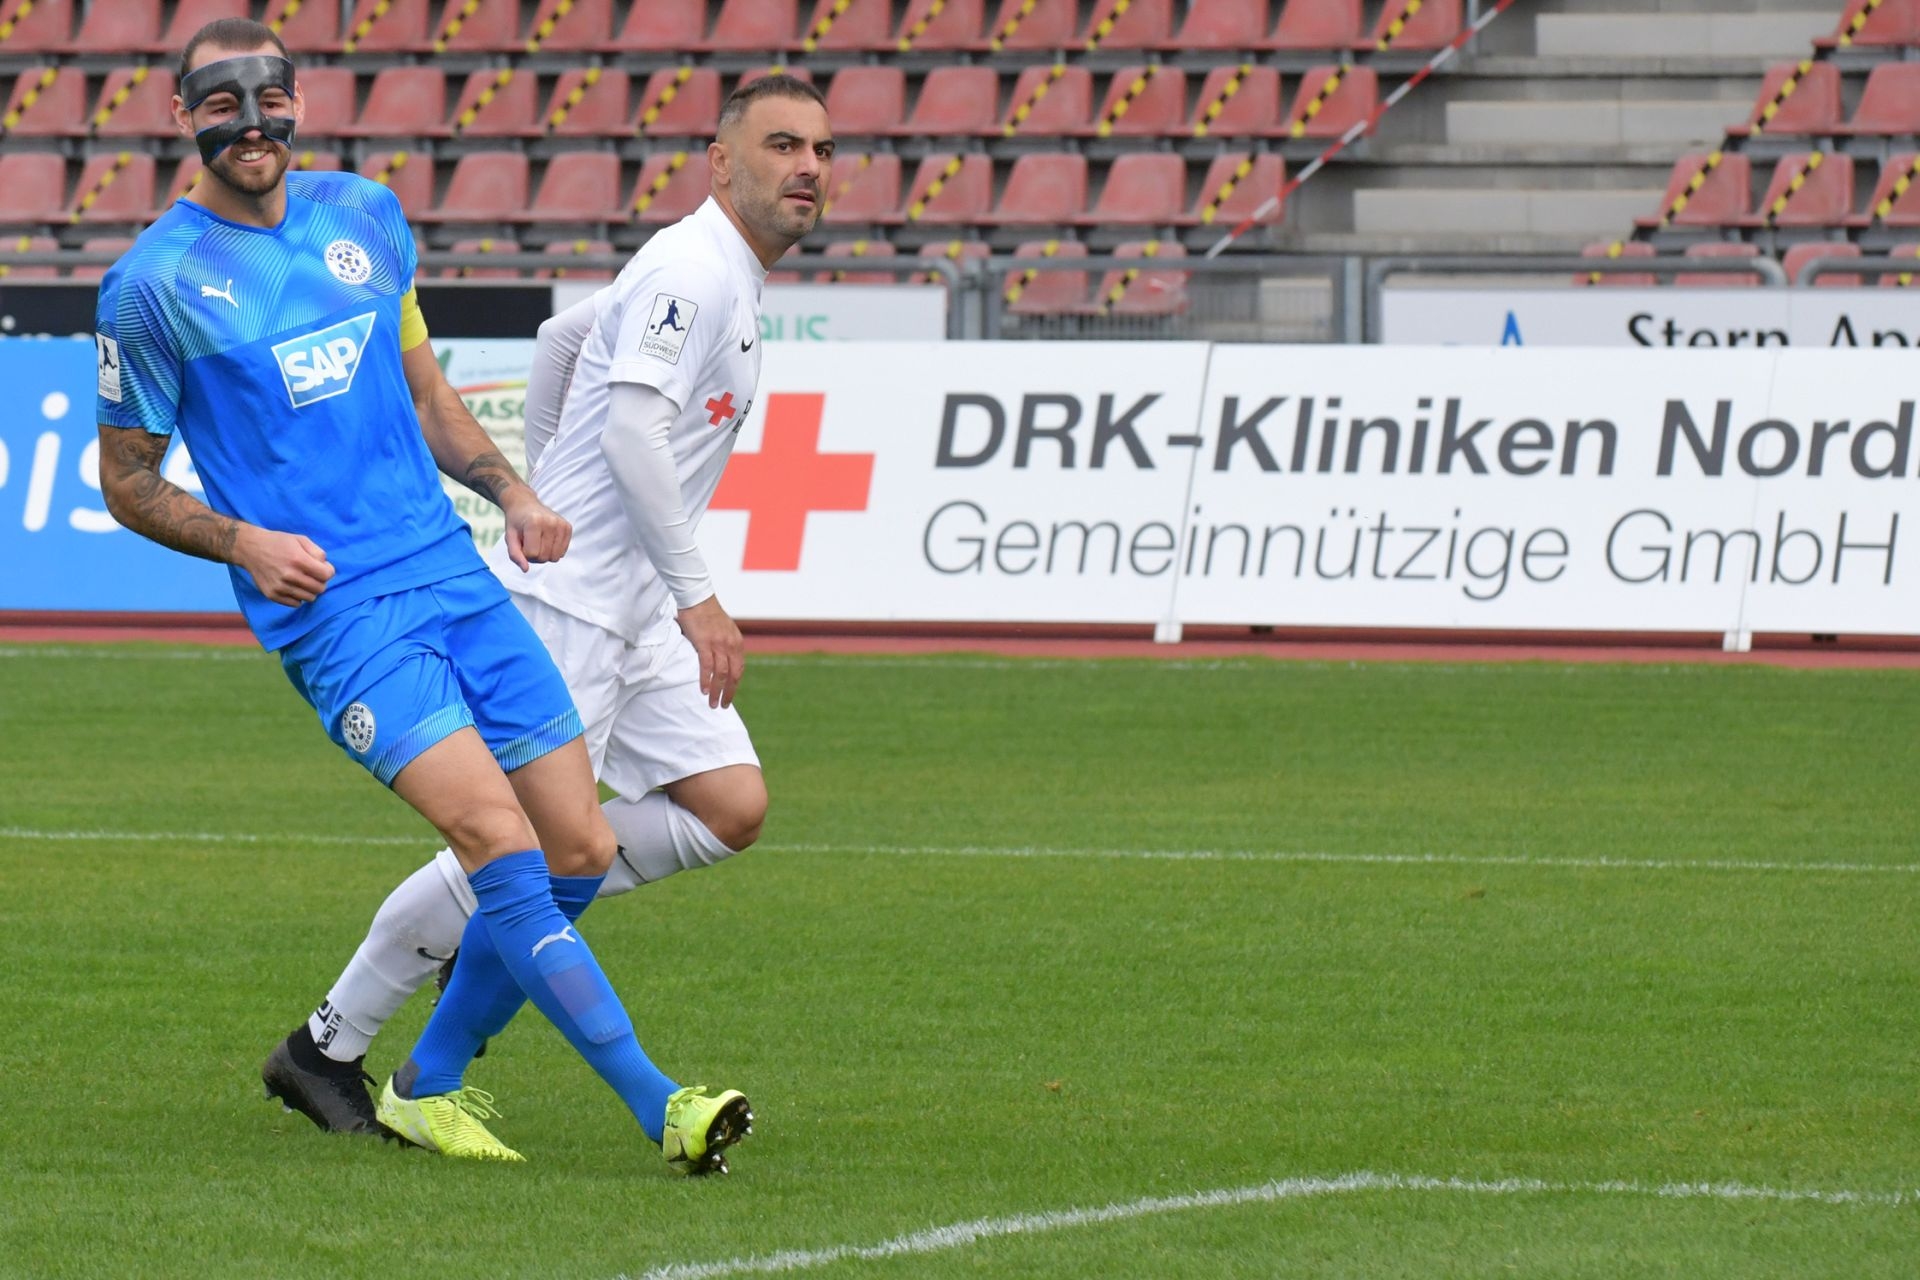 Regionalliga Südwest 2020/21, KSV Hessen Kassel, FC Astoria Walldorf, Endstand 1:3